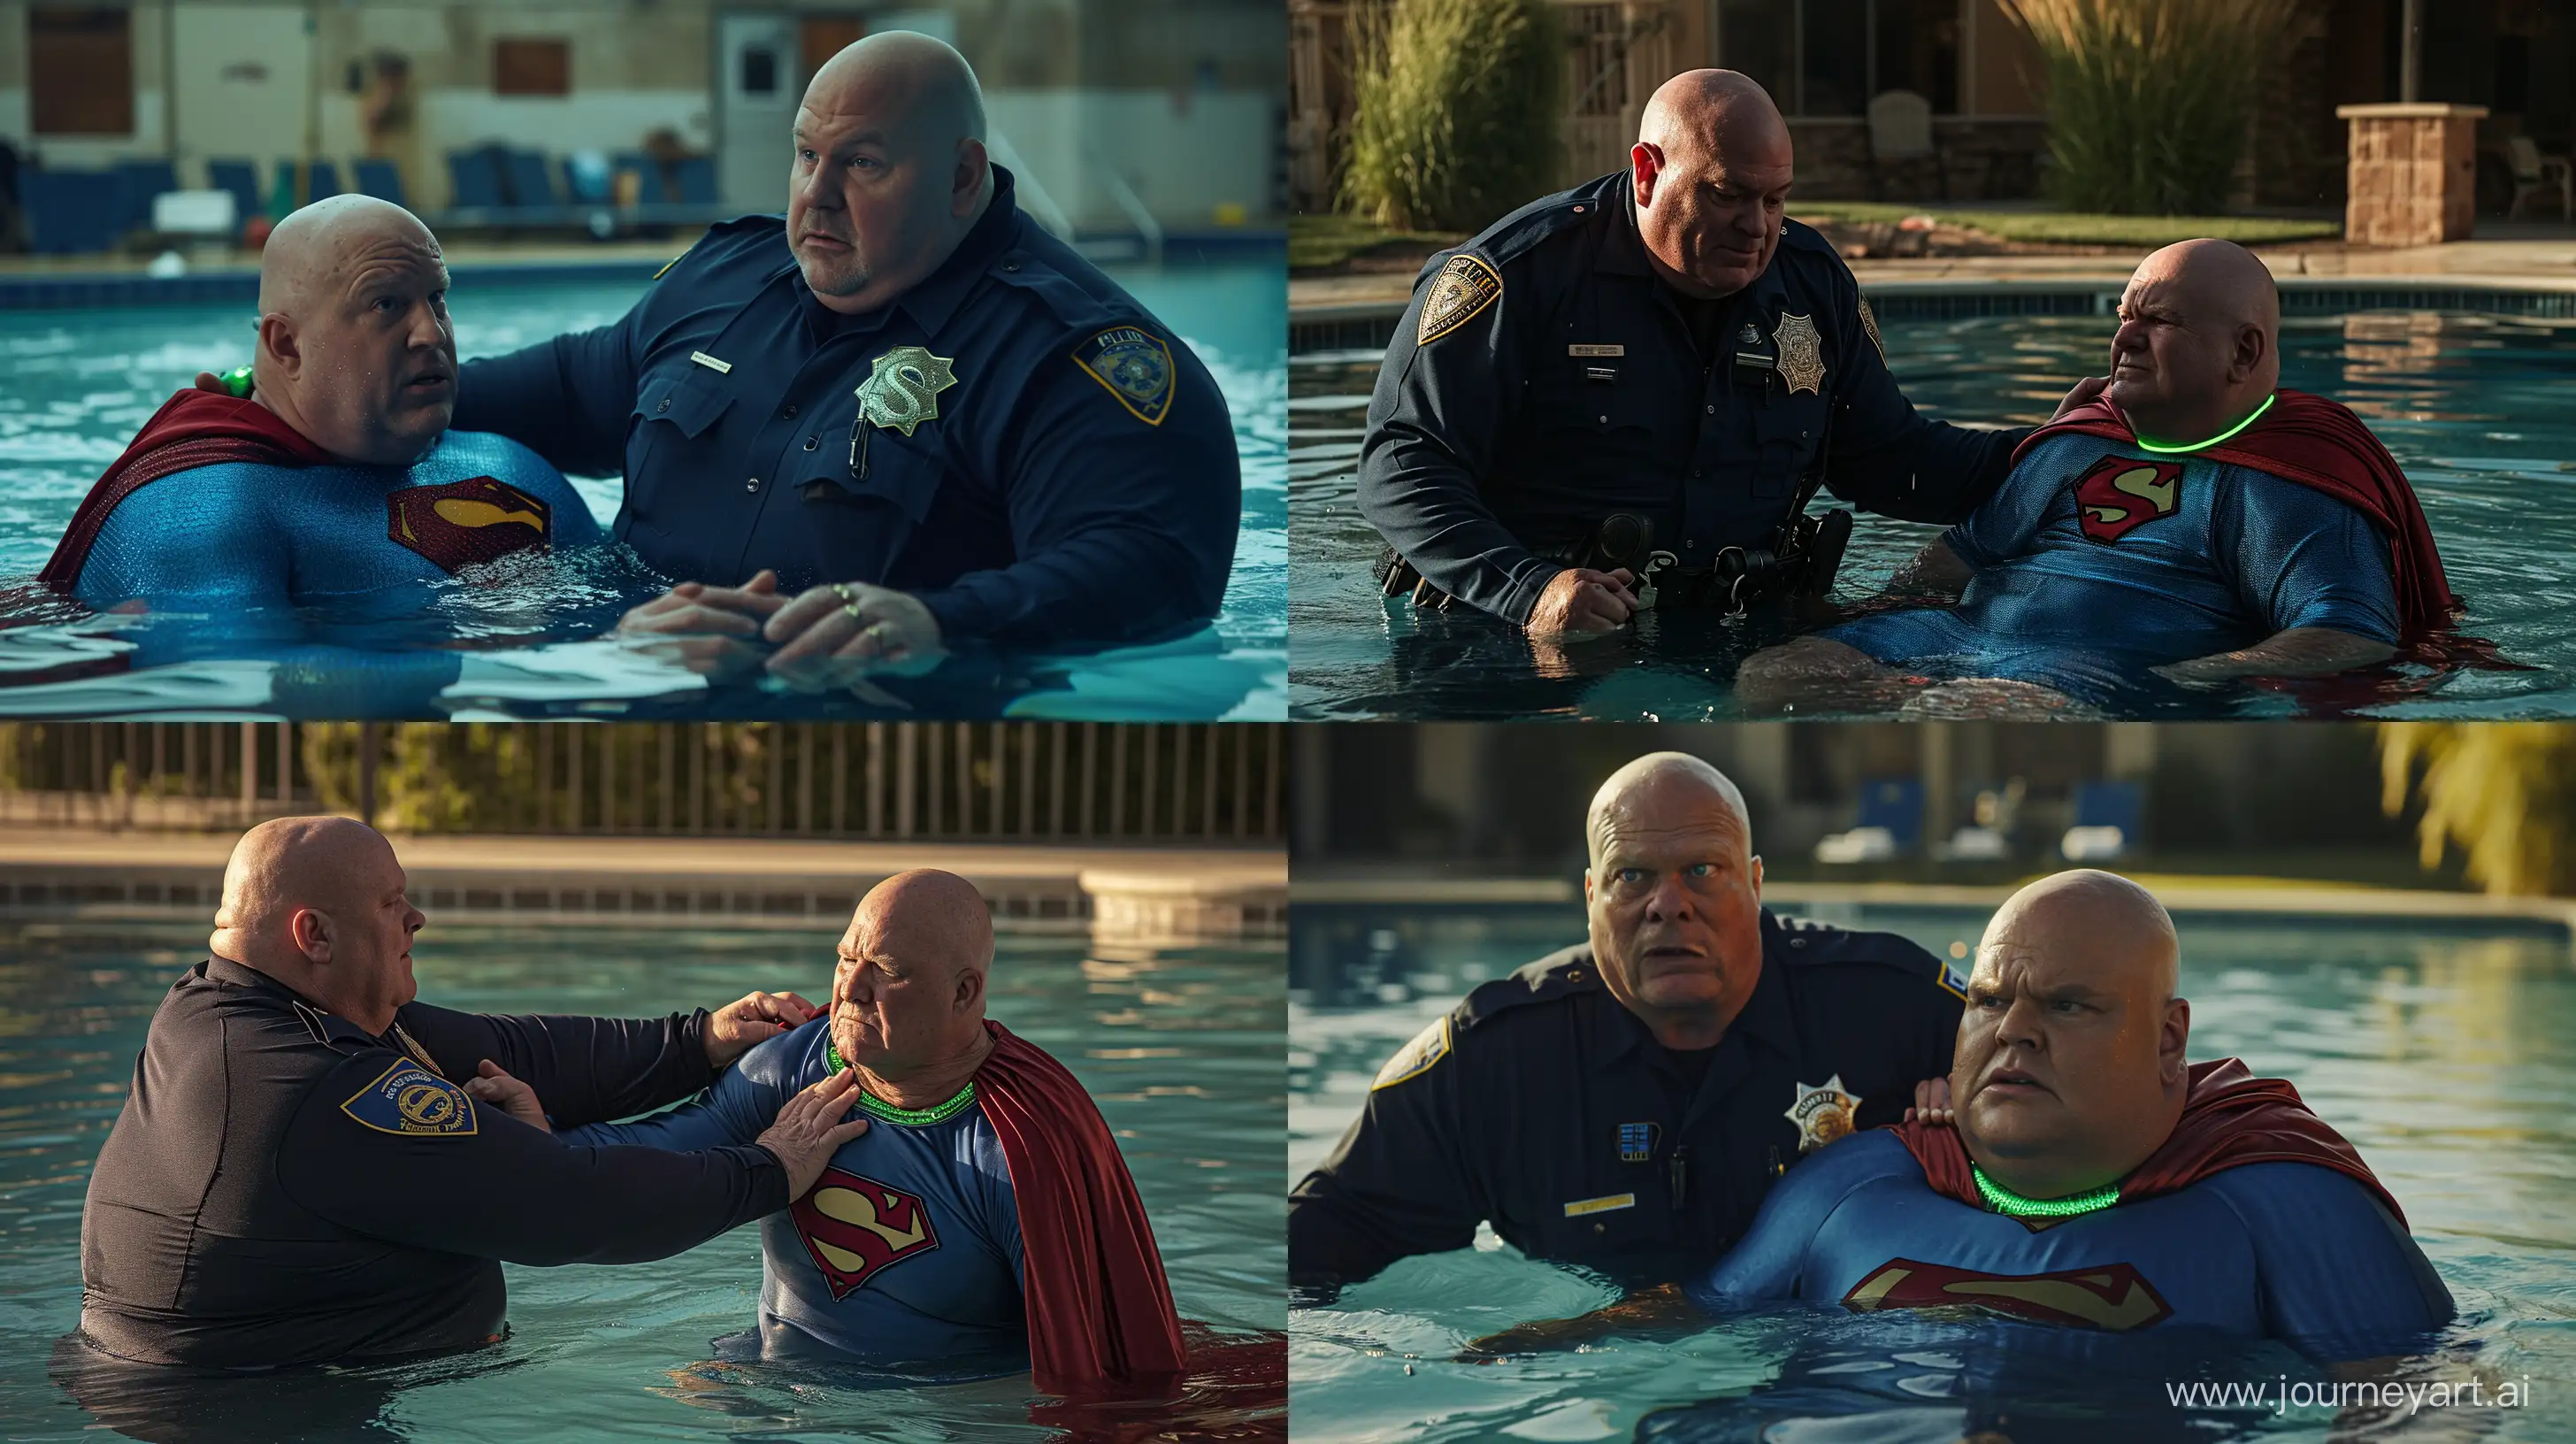 Serious-Police-Arrest-of-WaterSitting-Superman-in-Unique-Pool-Scene